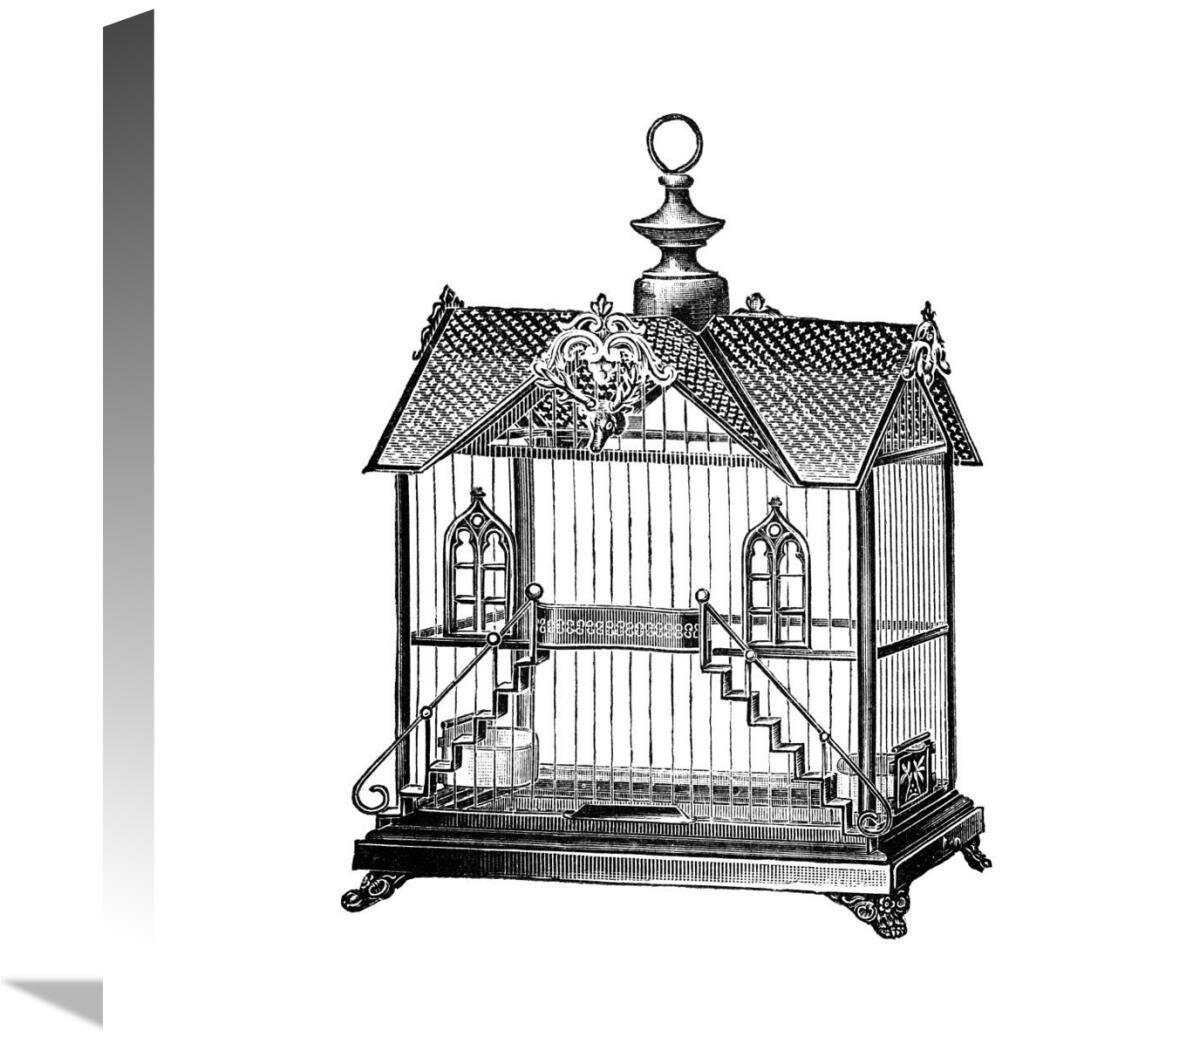 Normanhurst Geometric & Shapes Decorative Bird House Or Cage